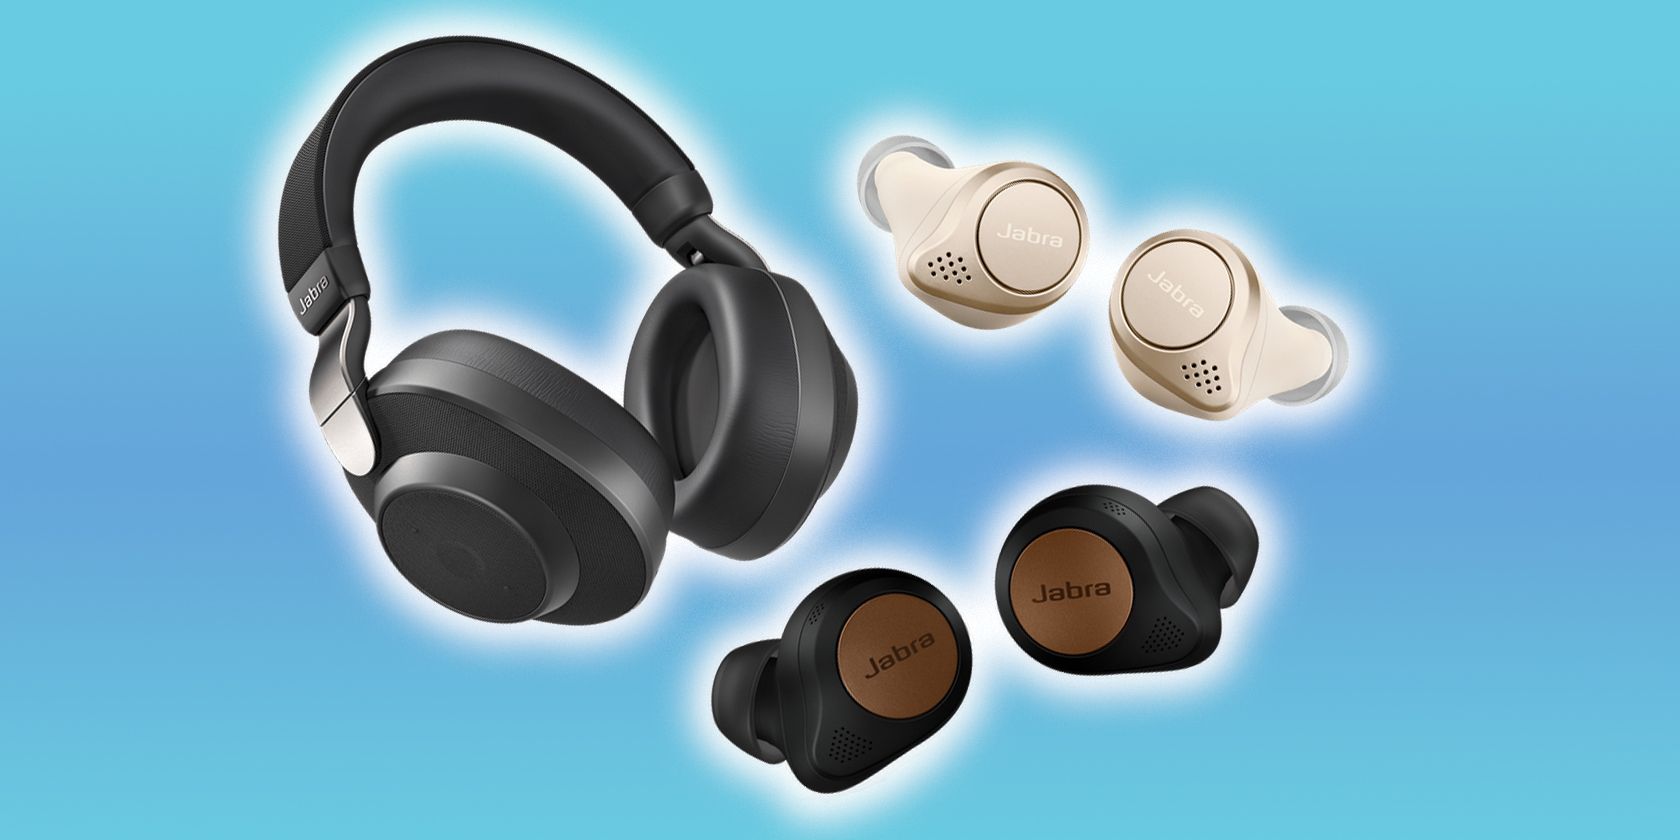 Grab a Great Deal On Jabra's Elite Headphone Range